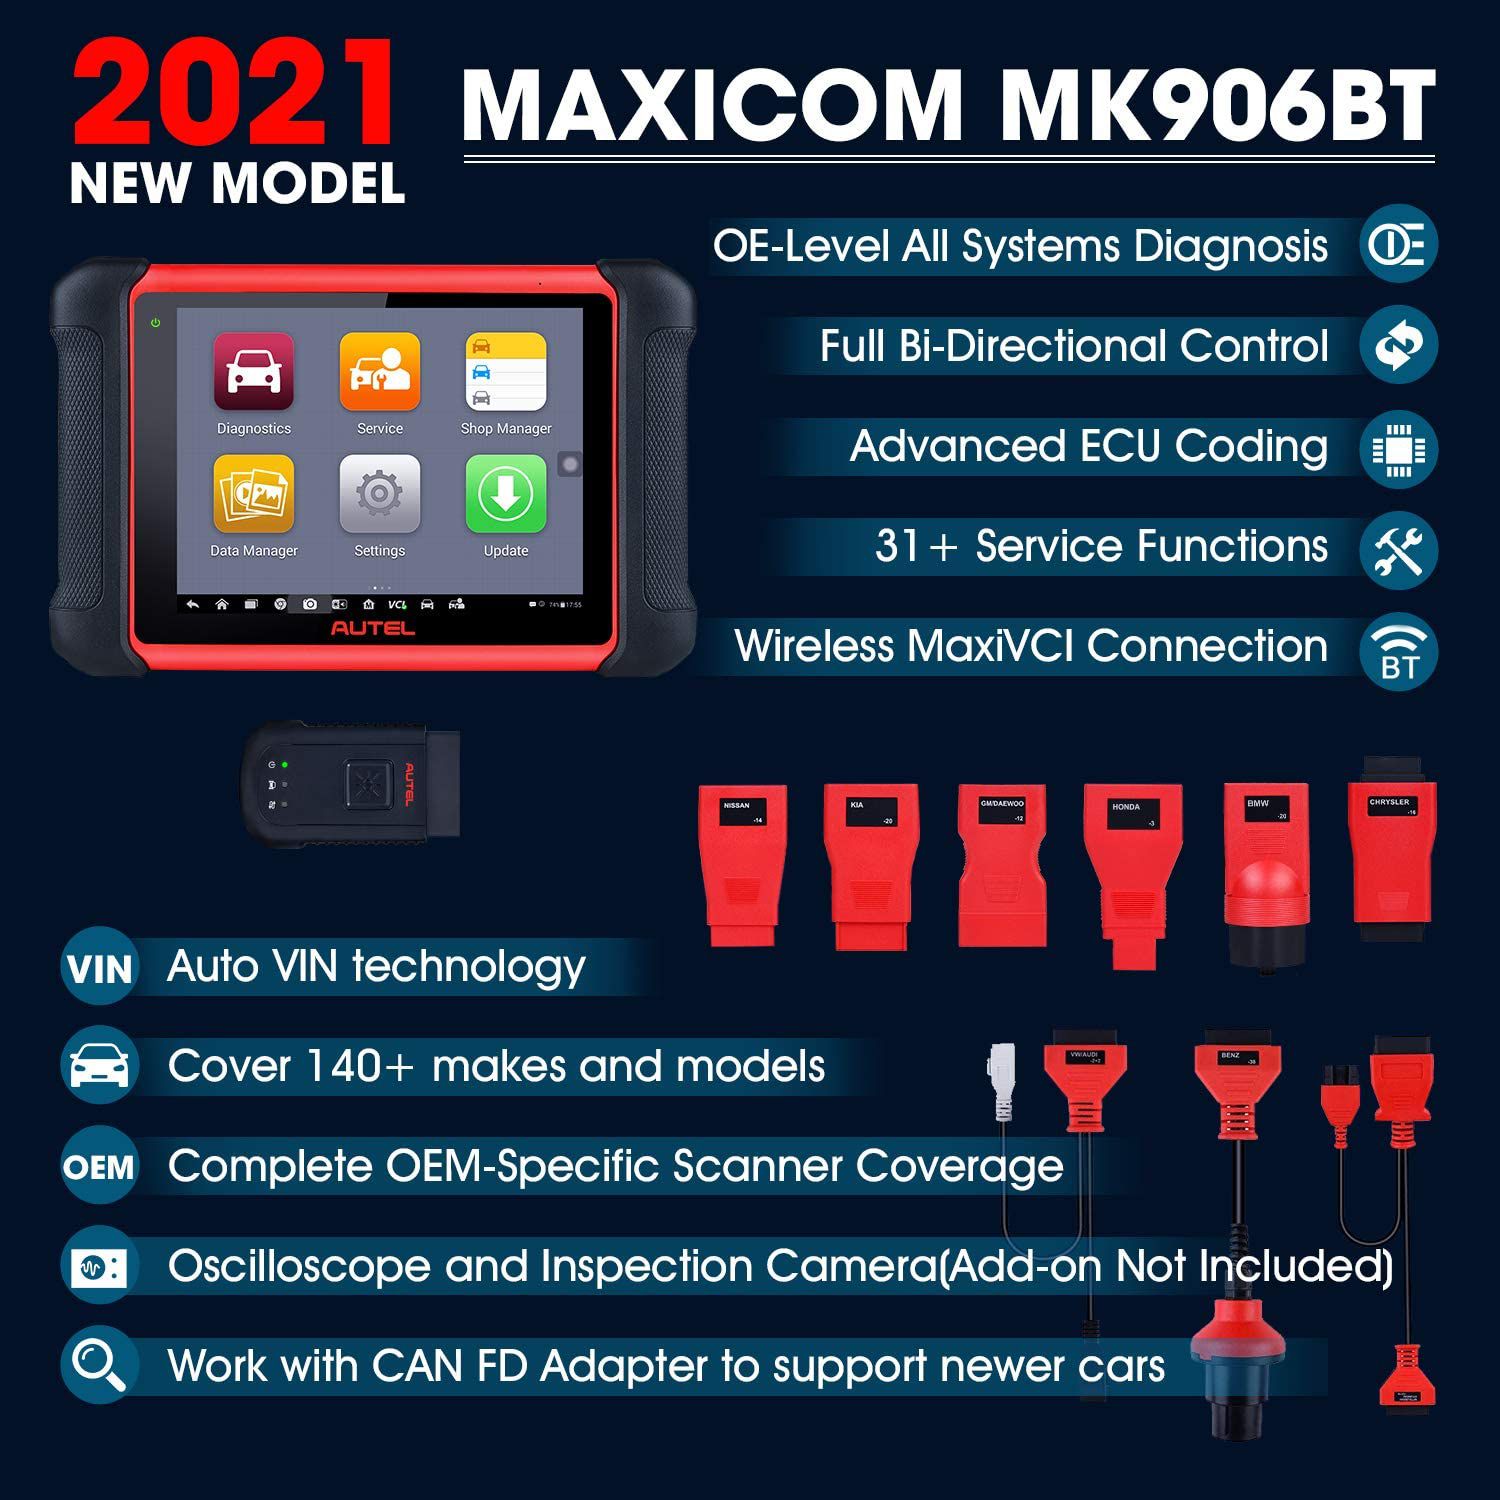 Autel MaxiCOM MK906BT Diagnostic Tool Bluetooth Scanner